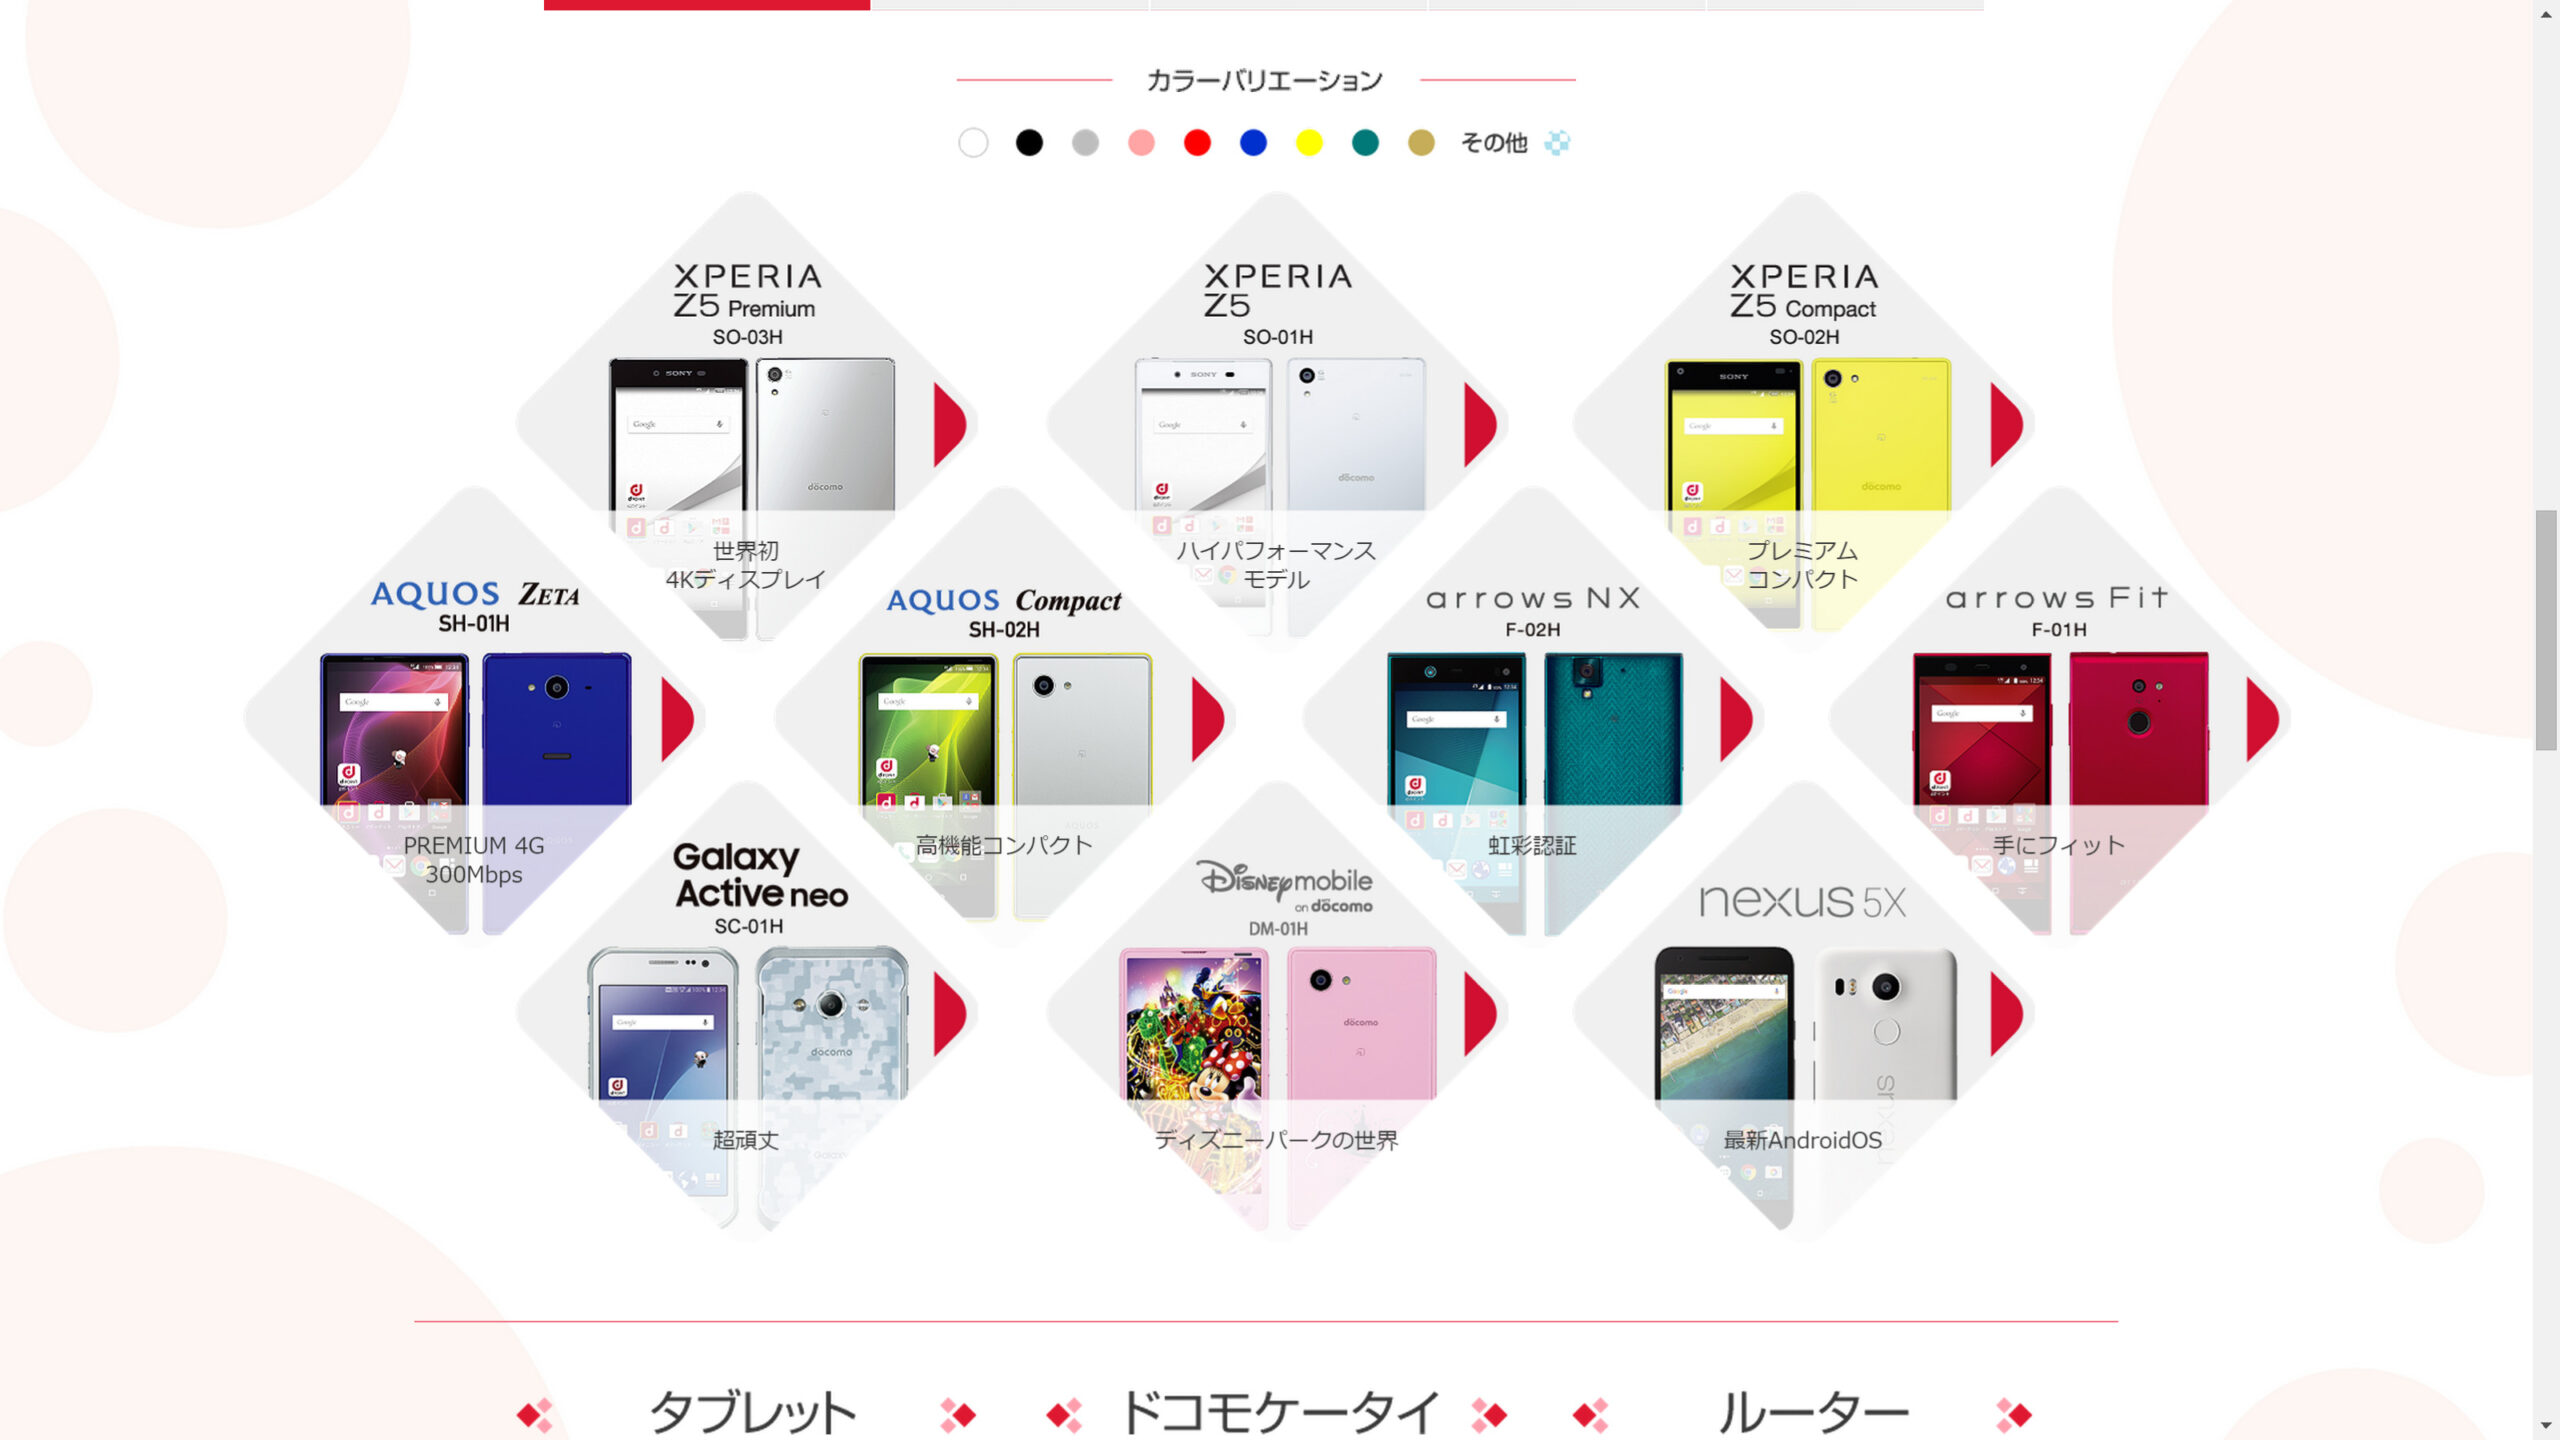 NTT docomo Product Line-Up 2015-2016